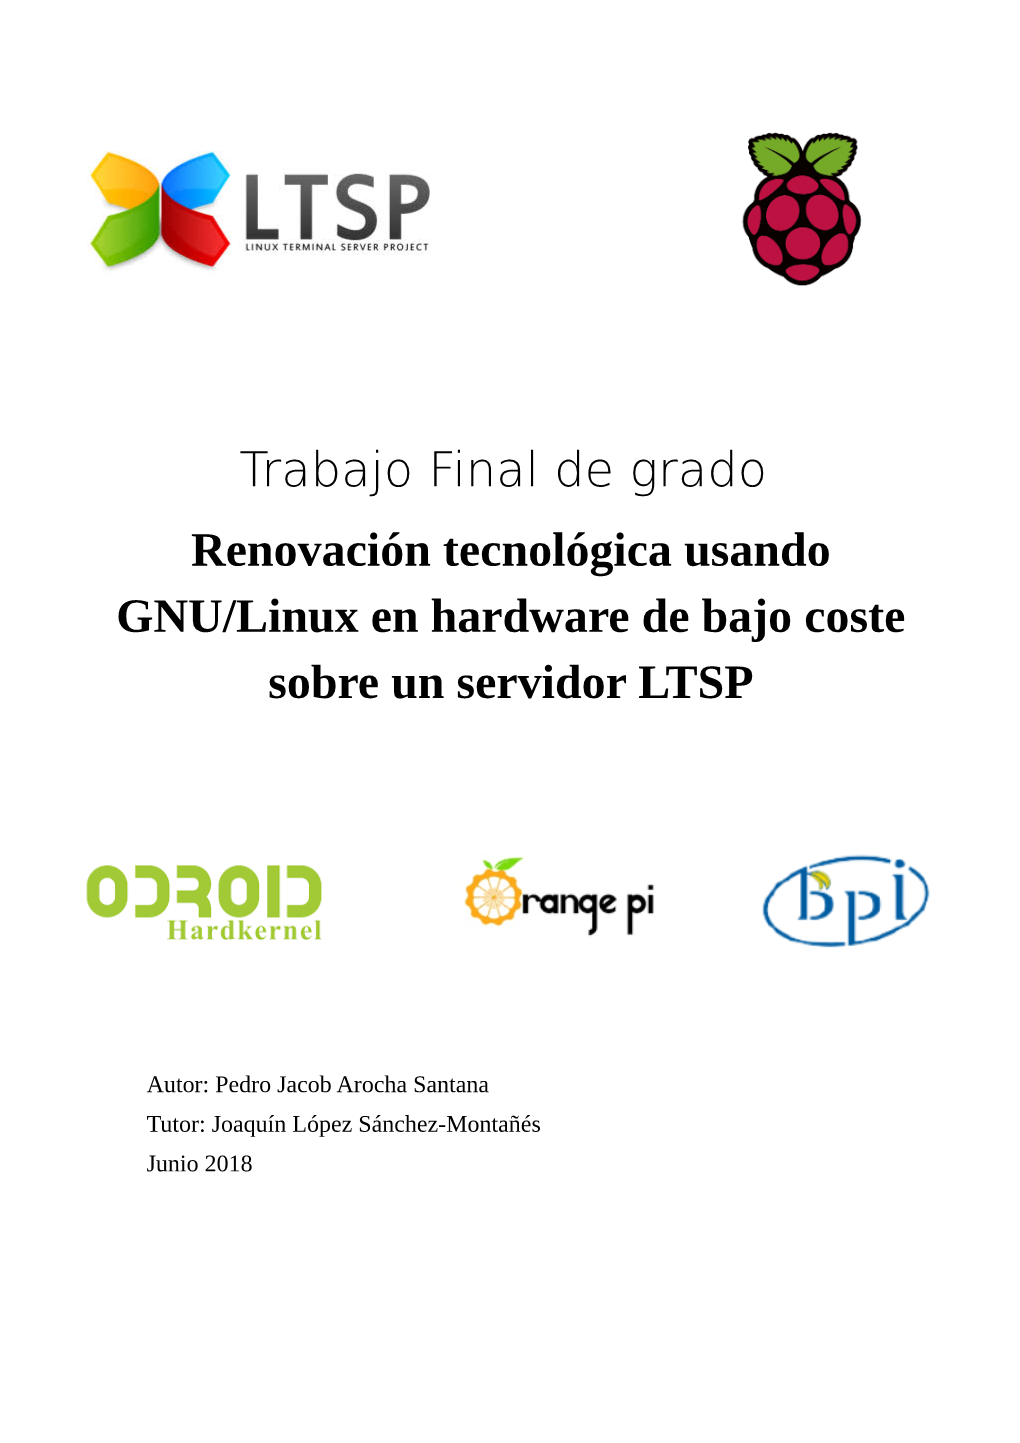 Renovación Tecnológica Usando GNU/Linux En Hardware De Bajo Coste Sobre Un Servidor LTSP